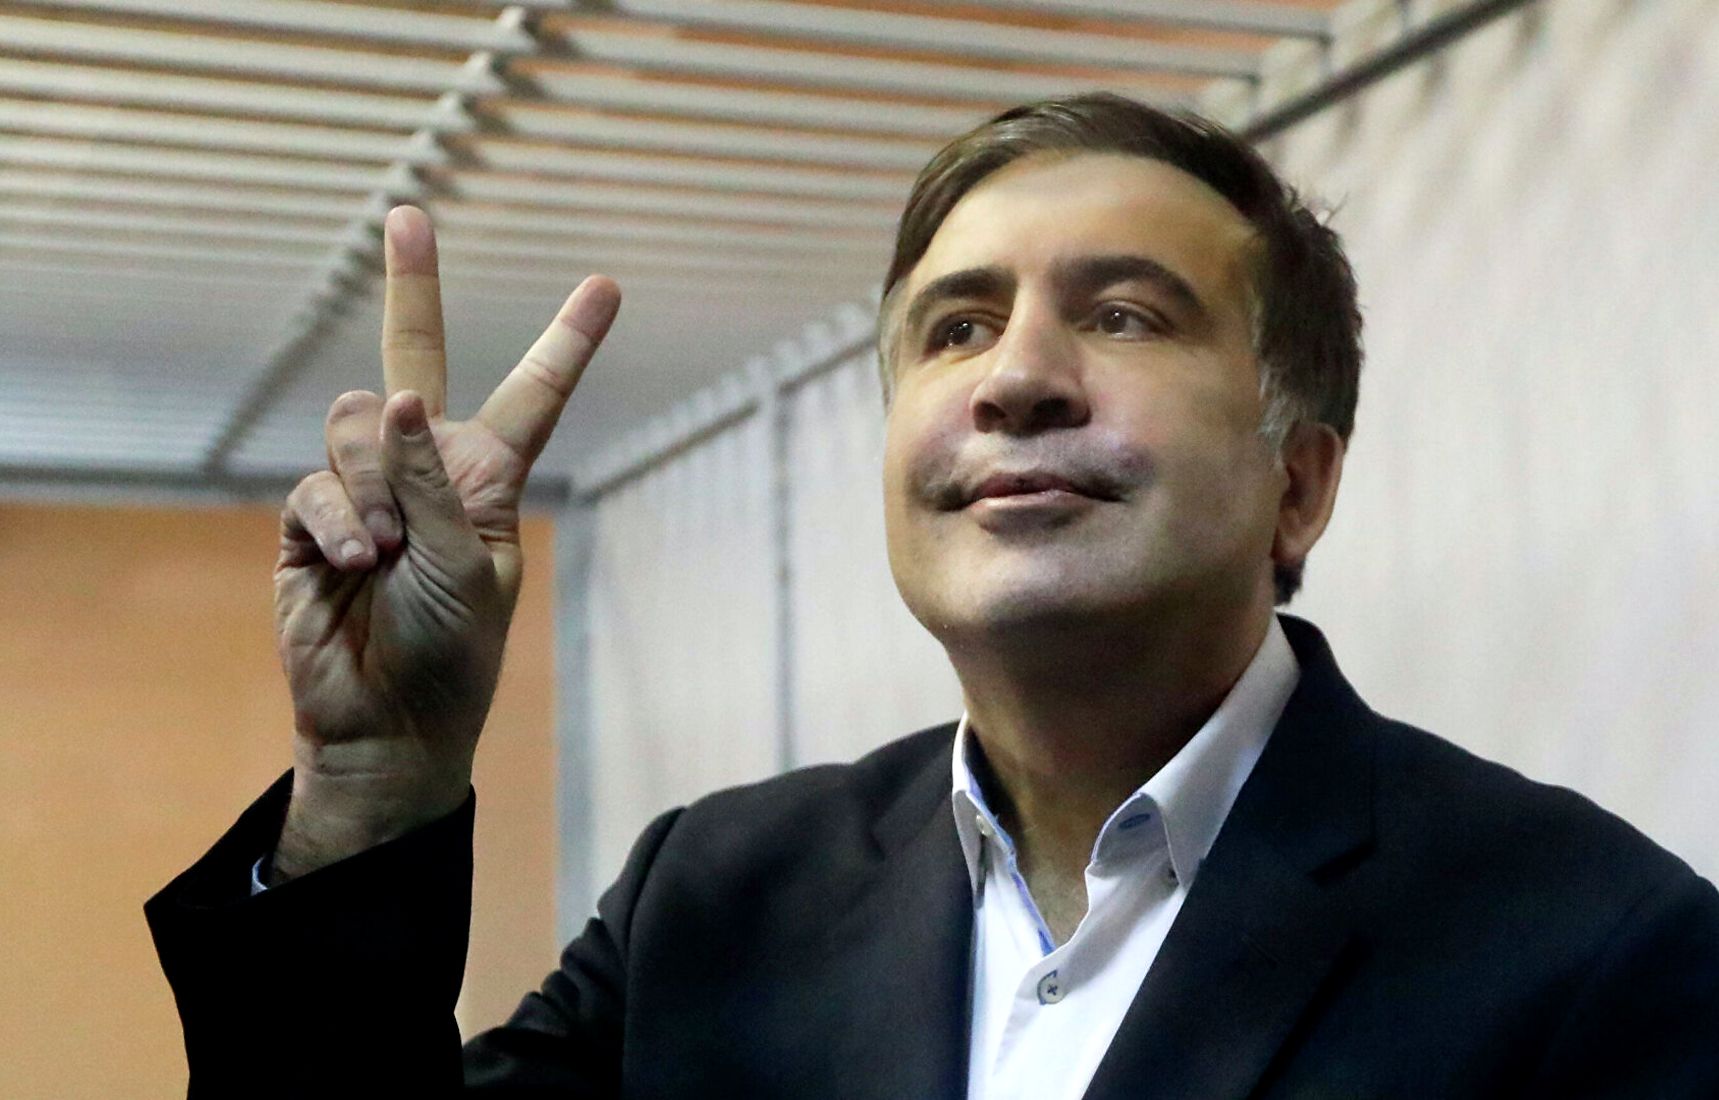 Находящийся в тюрьме Саакашвили купил себе телевизор и плед